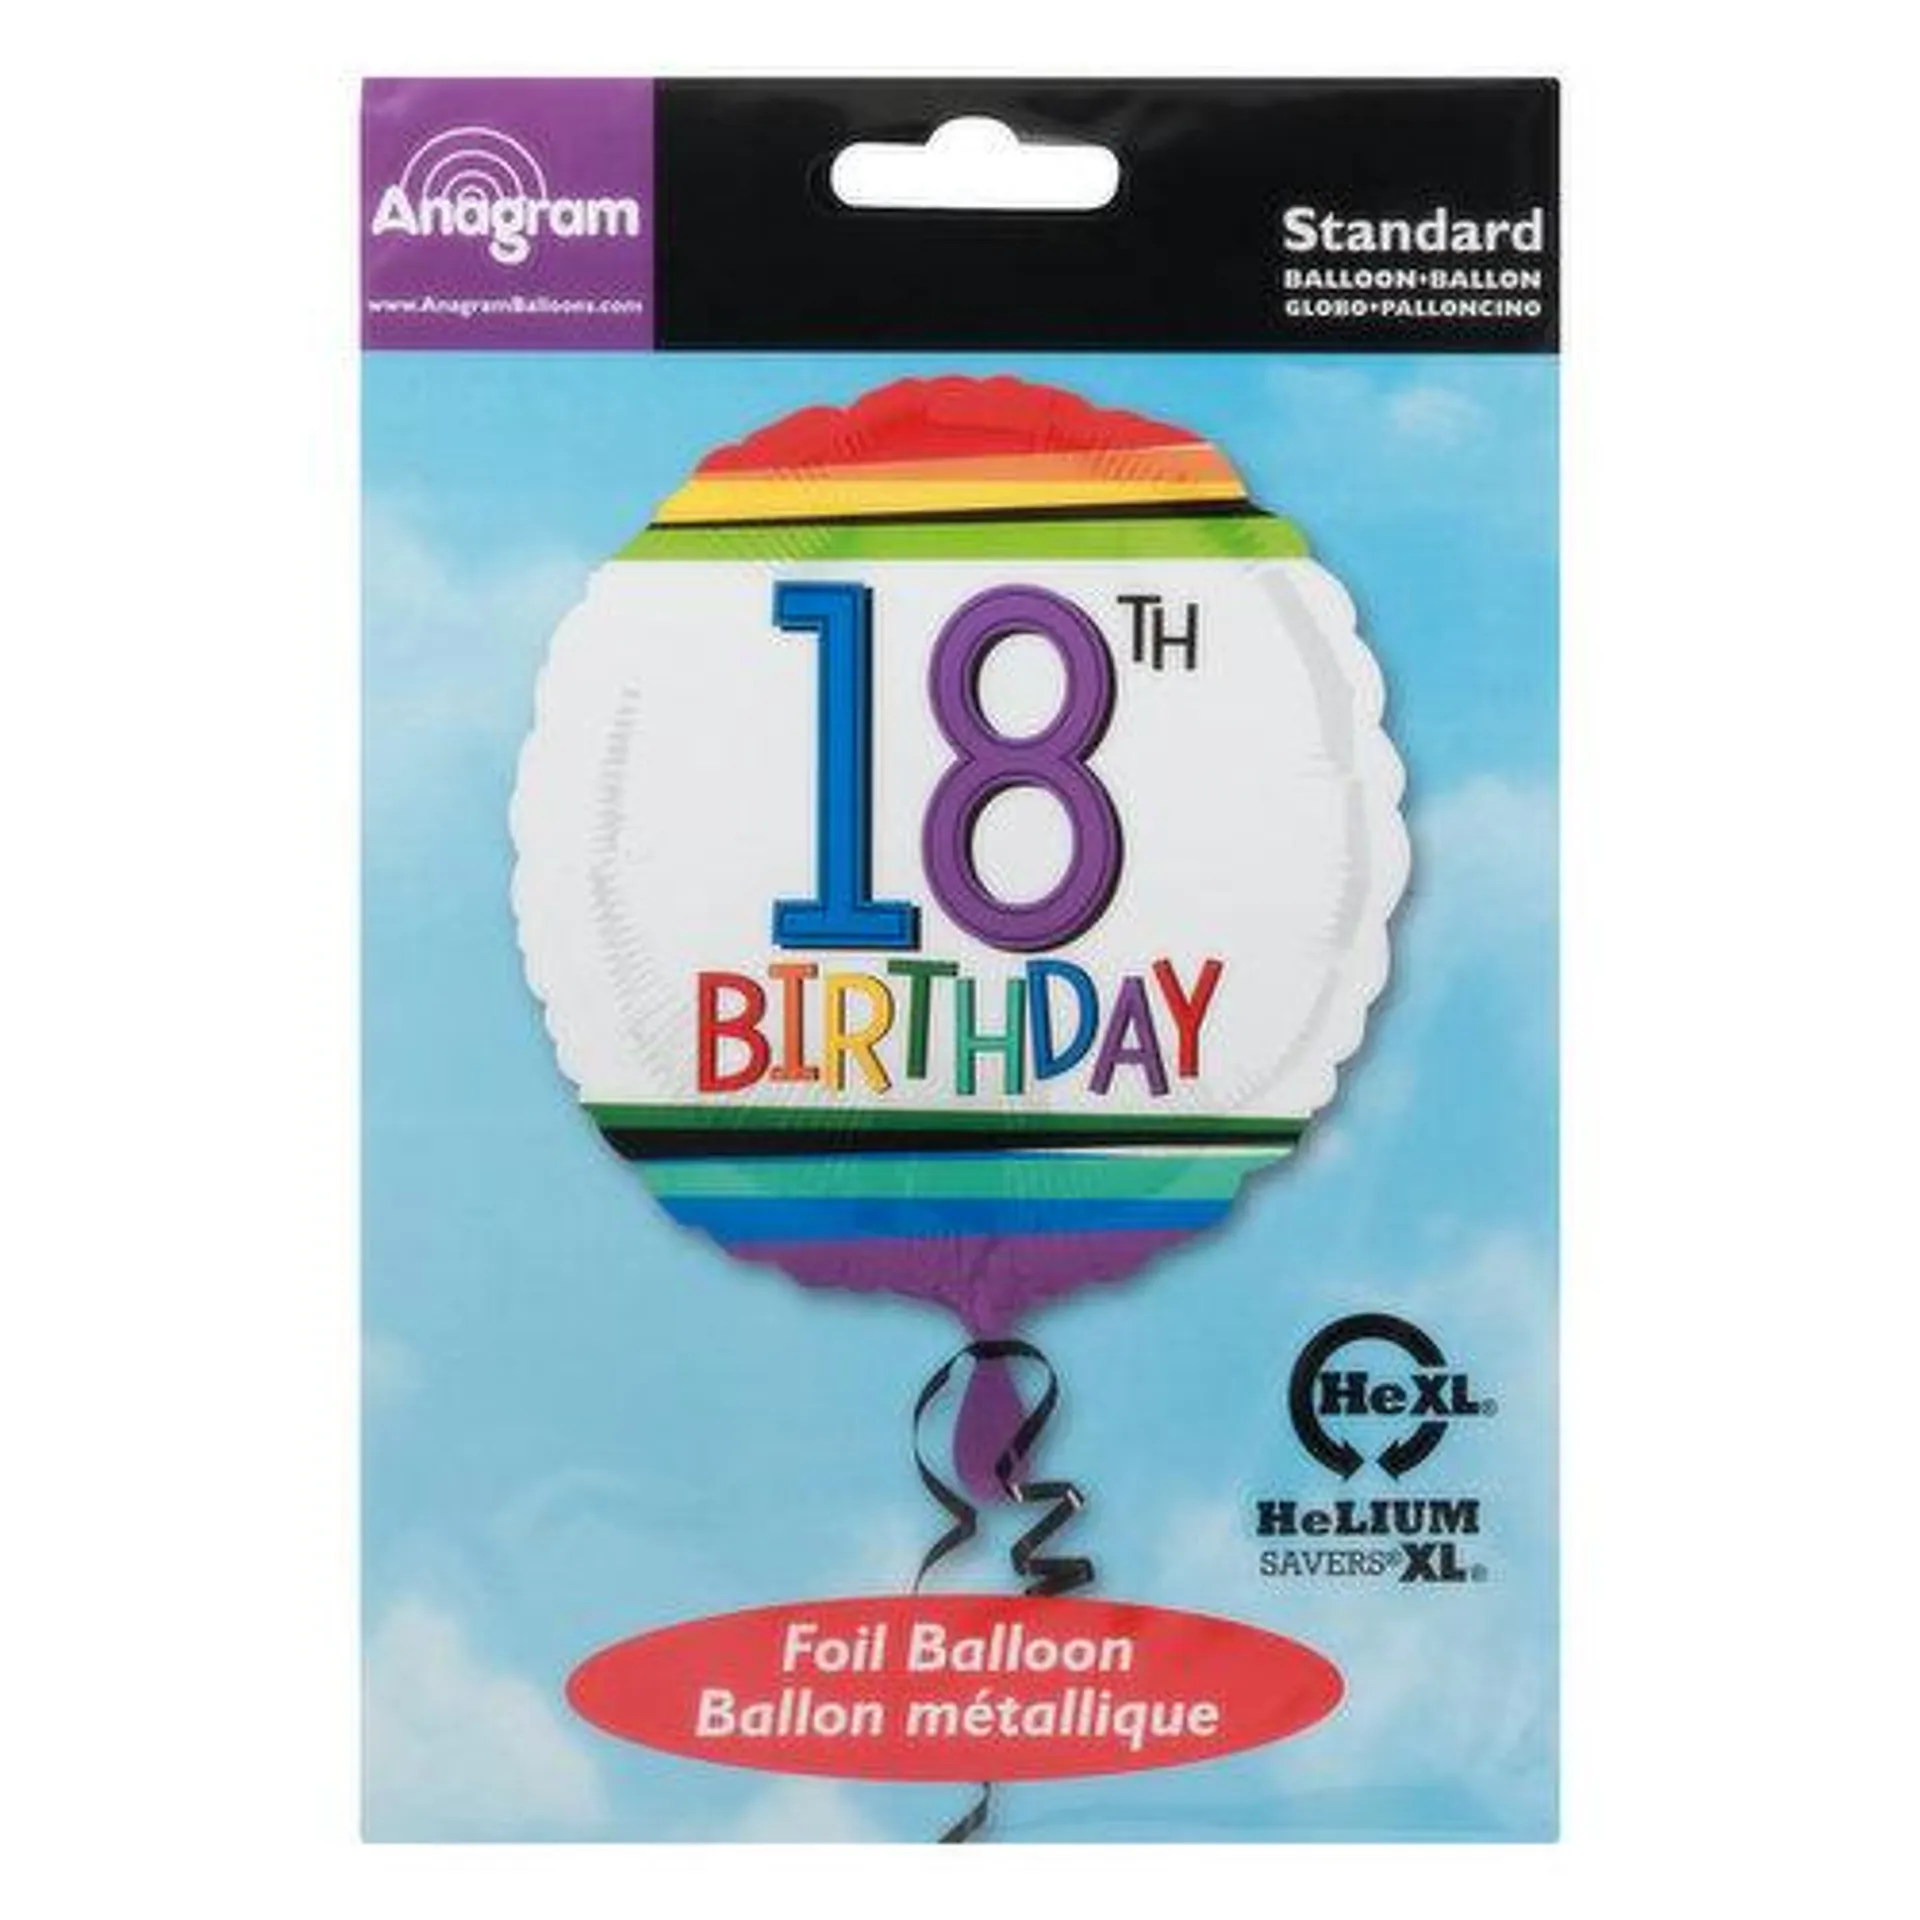 ANAGRAM Foil Balloon, 18th Birthday, Standard - 1 Each